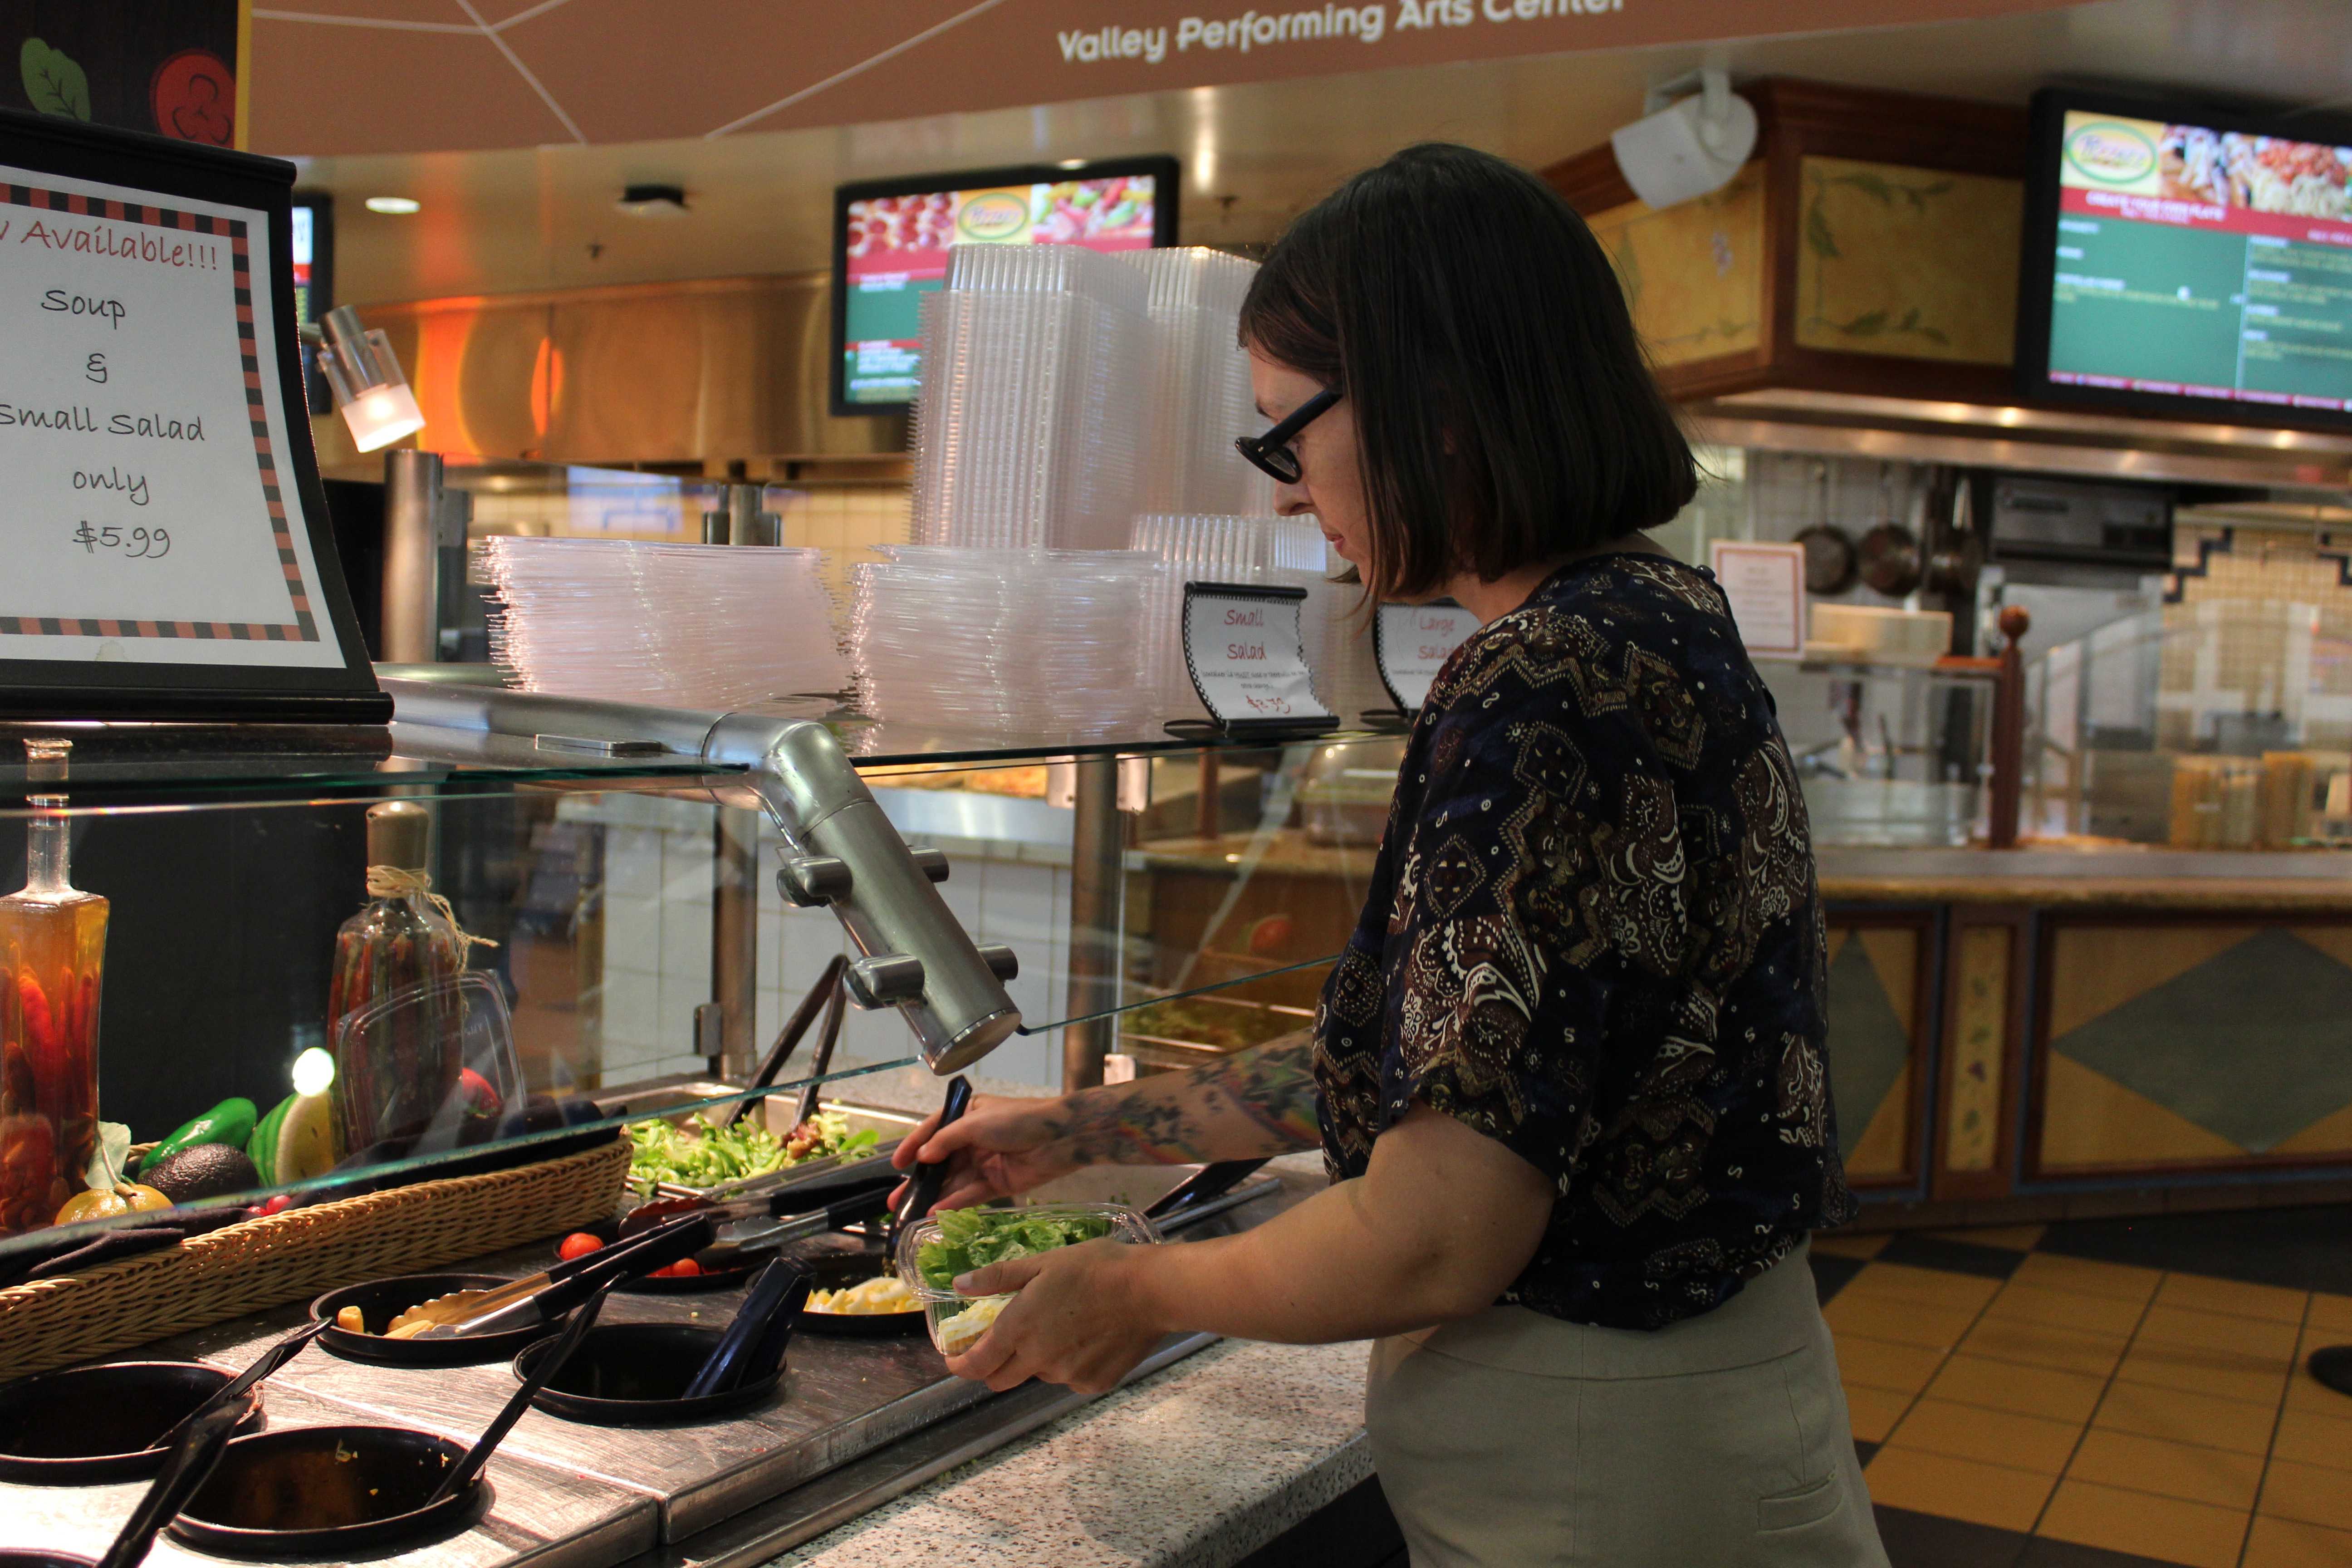 Woman helps herself at salad bar